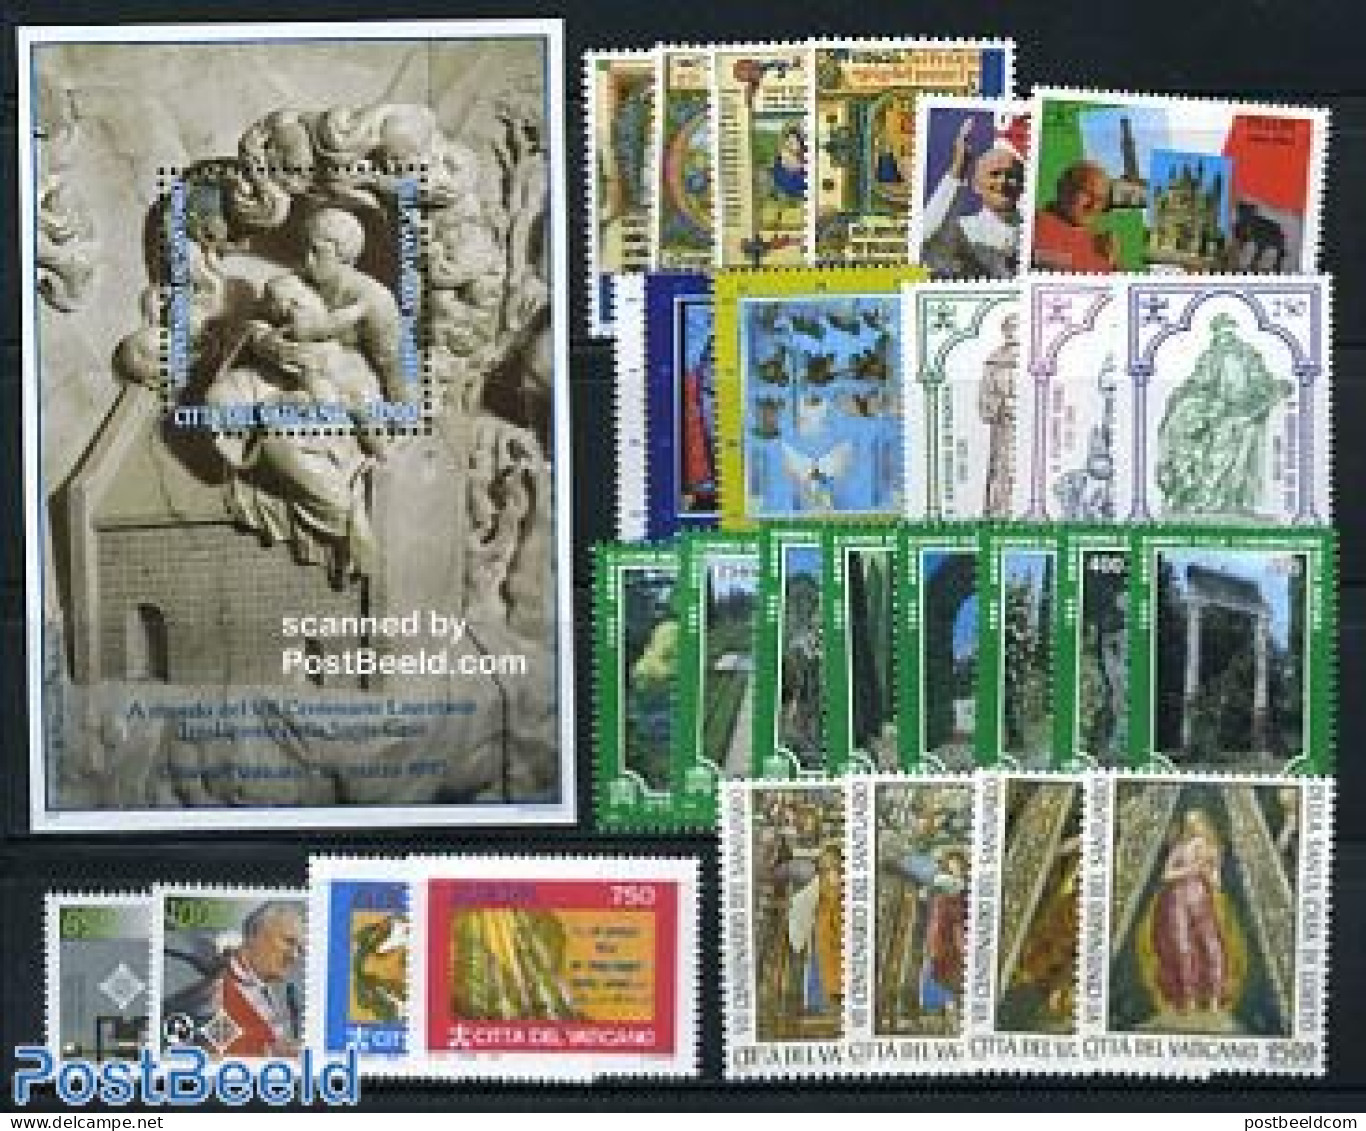 Vatican 1995 Year Set 1995 (30v+1s/s), Mint NH - Neufs